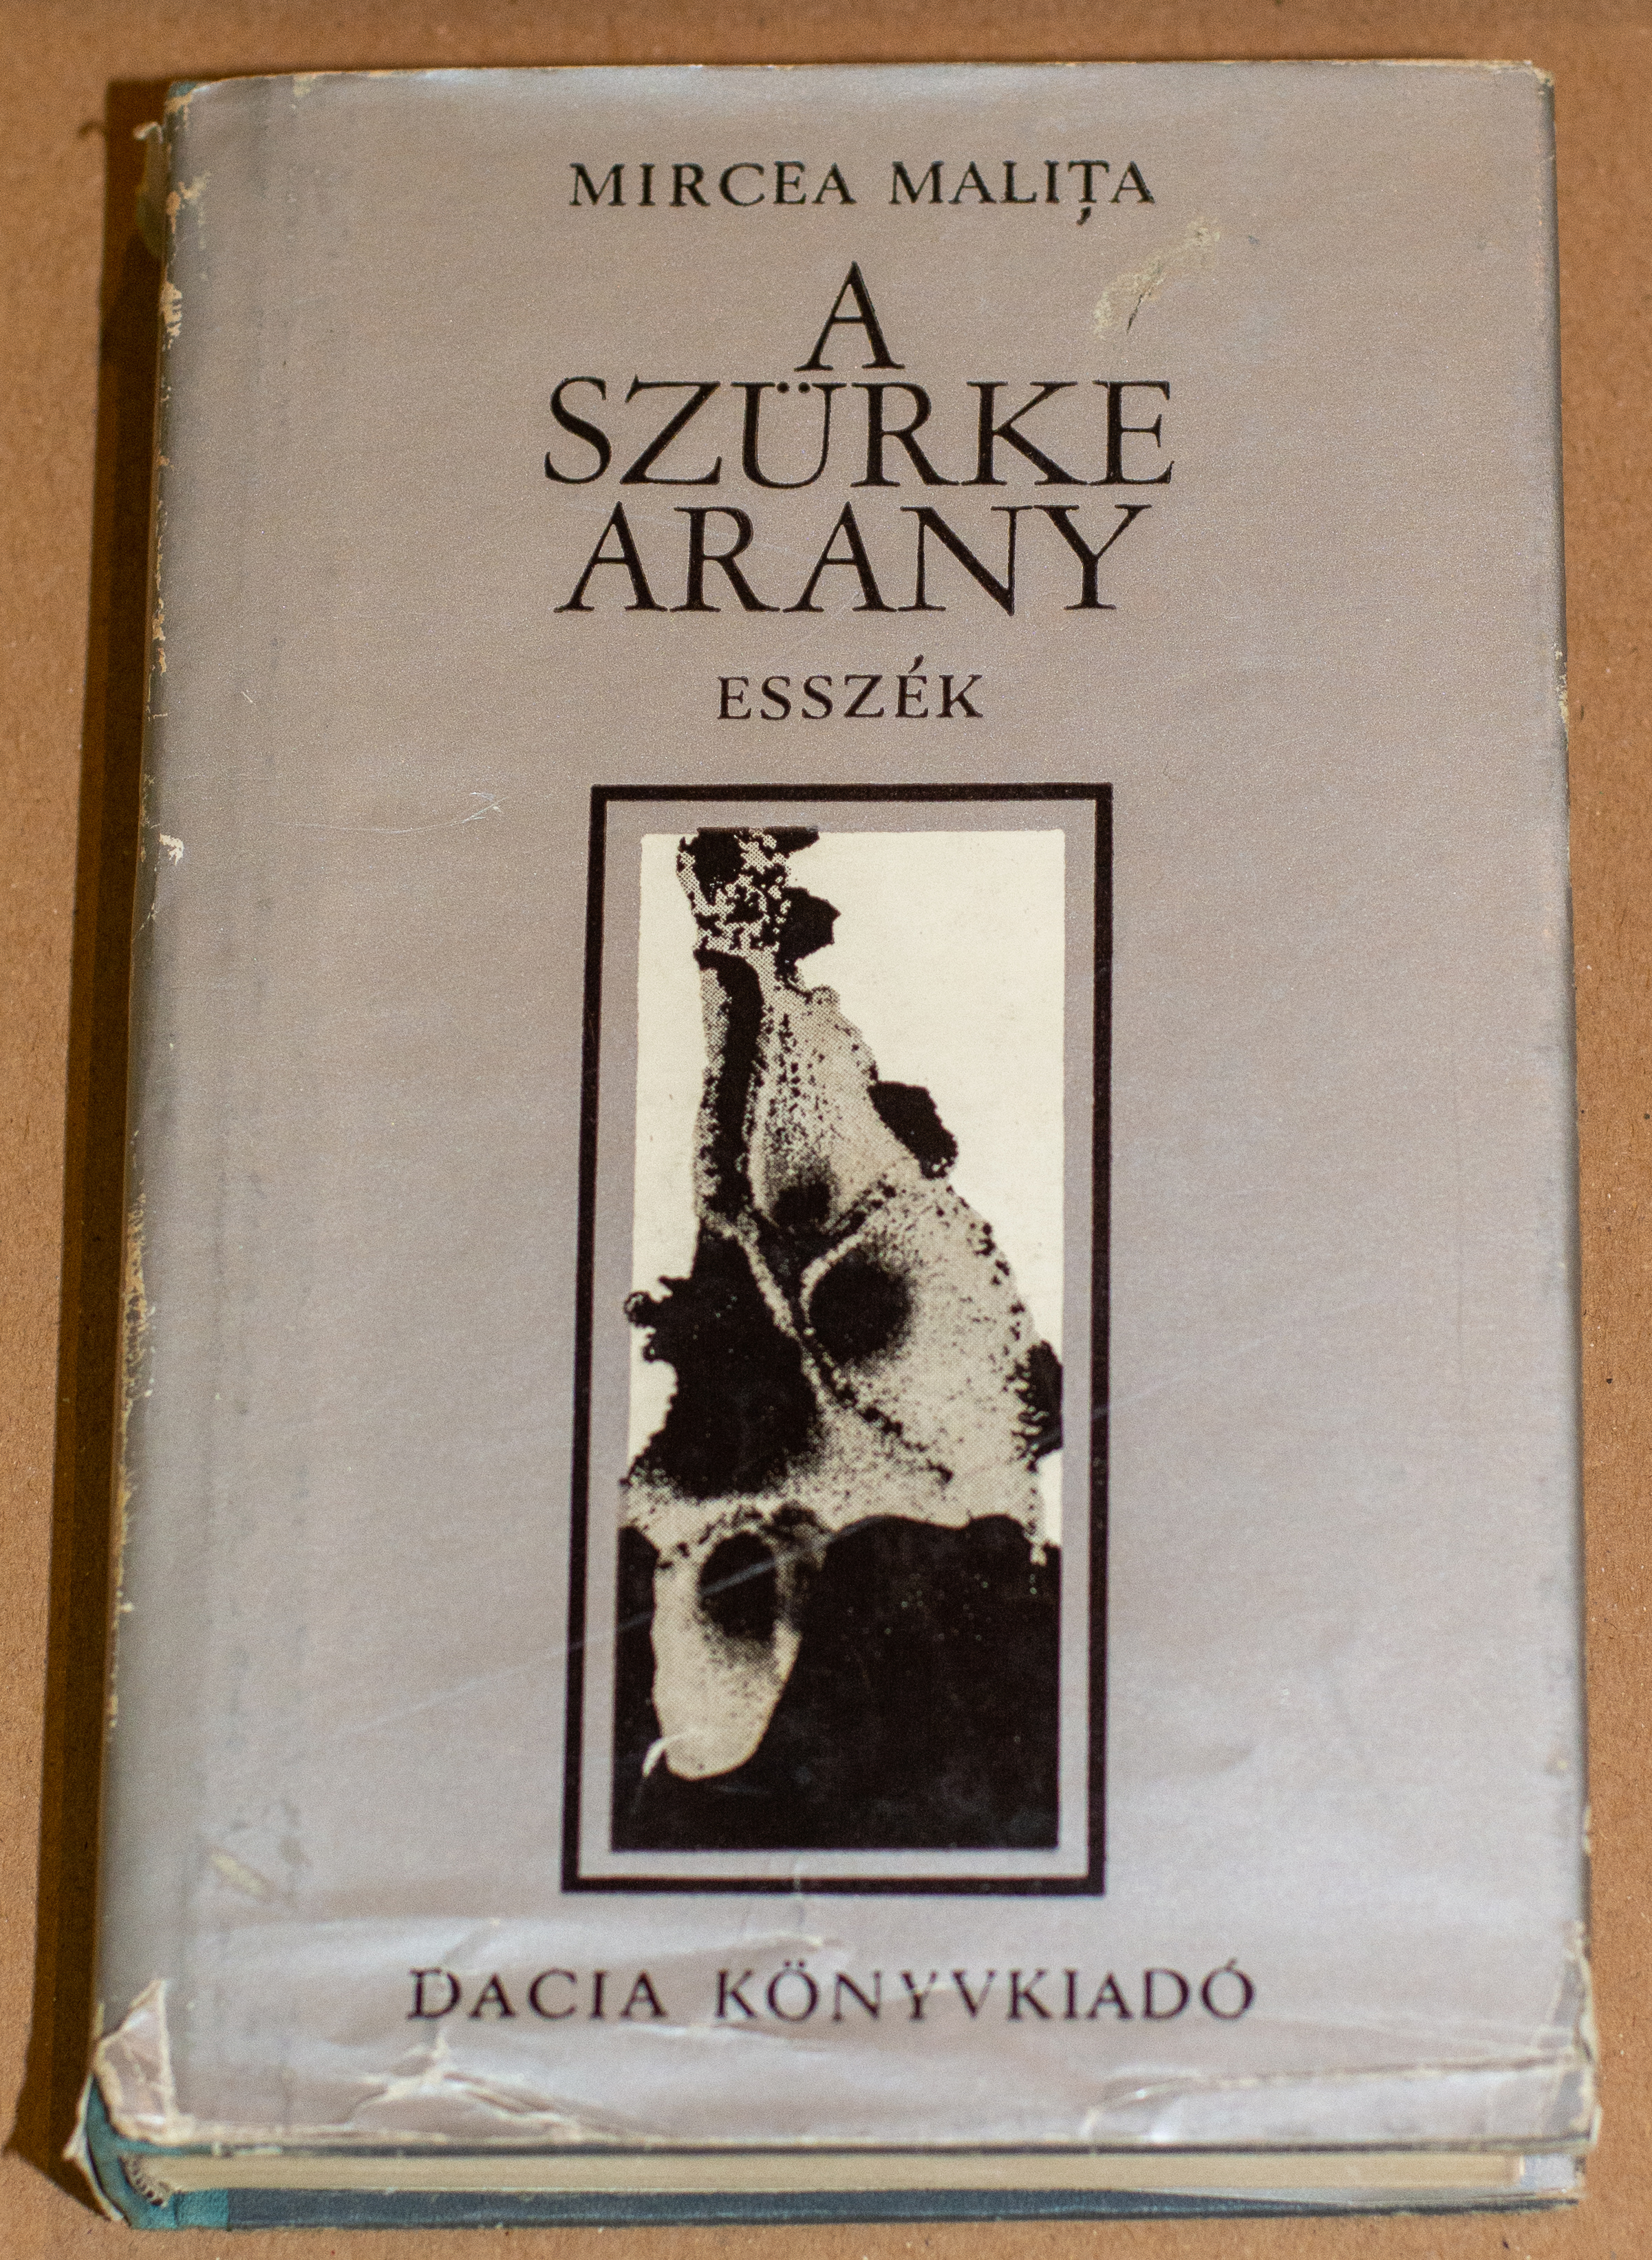 A Szurke Arany